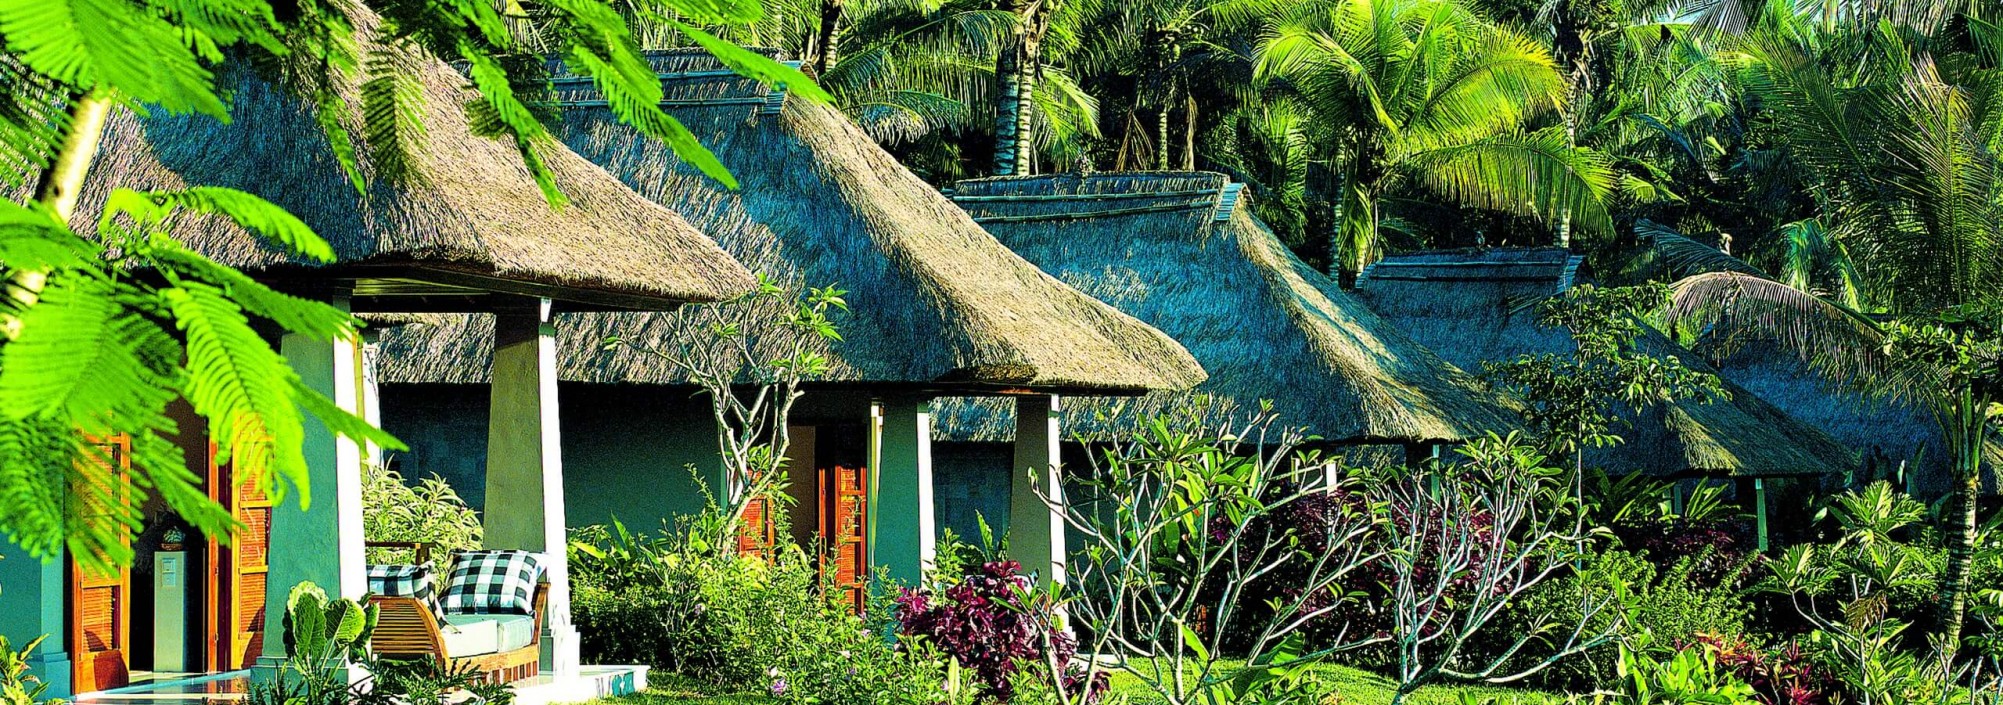 Maya Ubud Resort & Spa - Luxe hotels en resorts in Ubud - Bali Travel